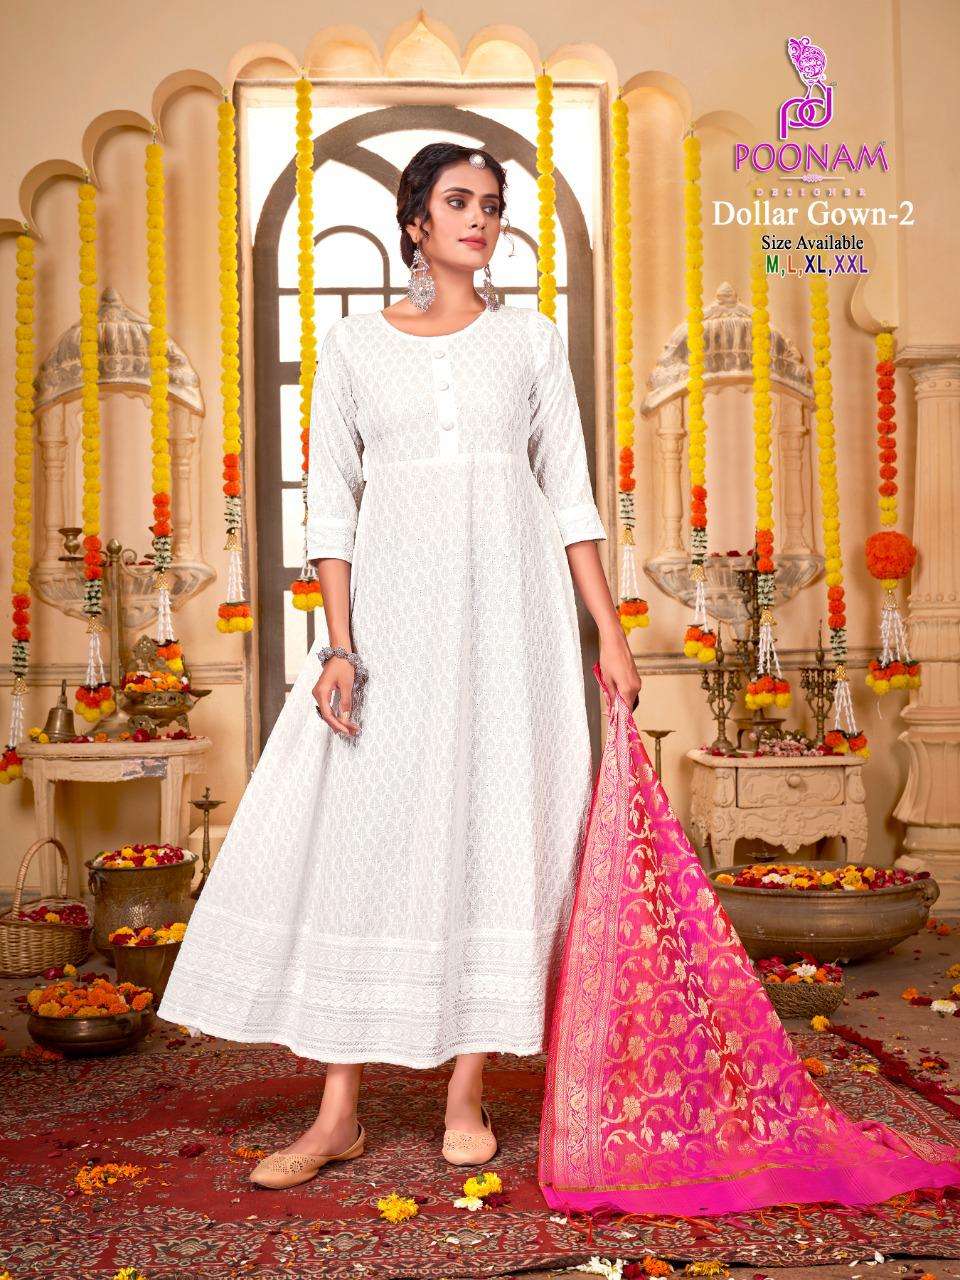 poonam designer dollar gown vol-2 1001-1008 stylish designer gown with dupatta catalogue at best price surat 